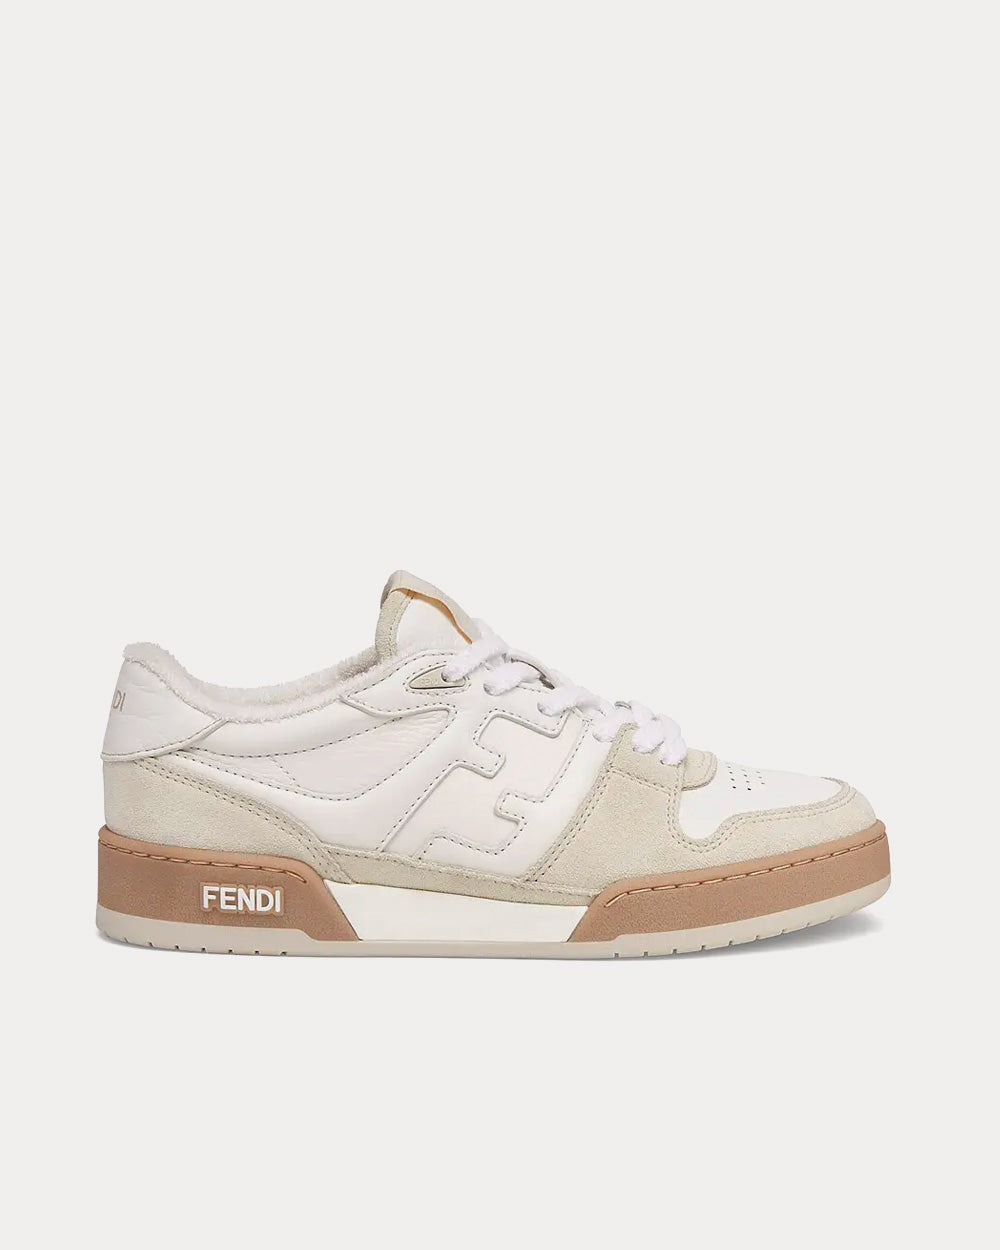 Fendi Fendi Match sneakers - White